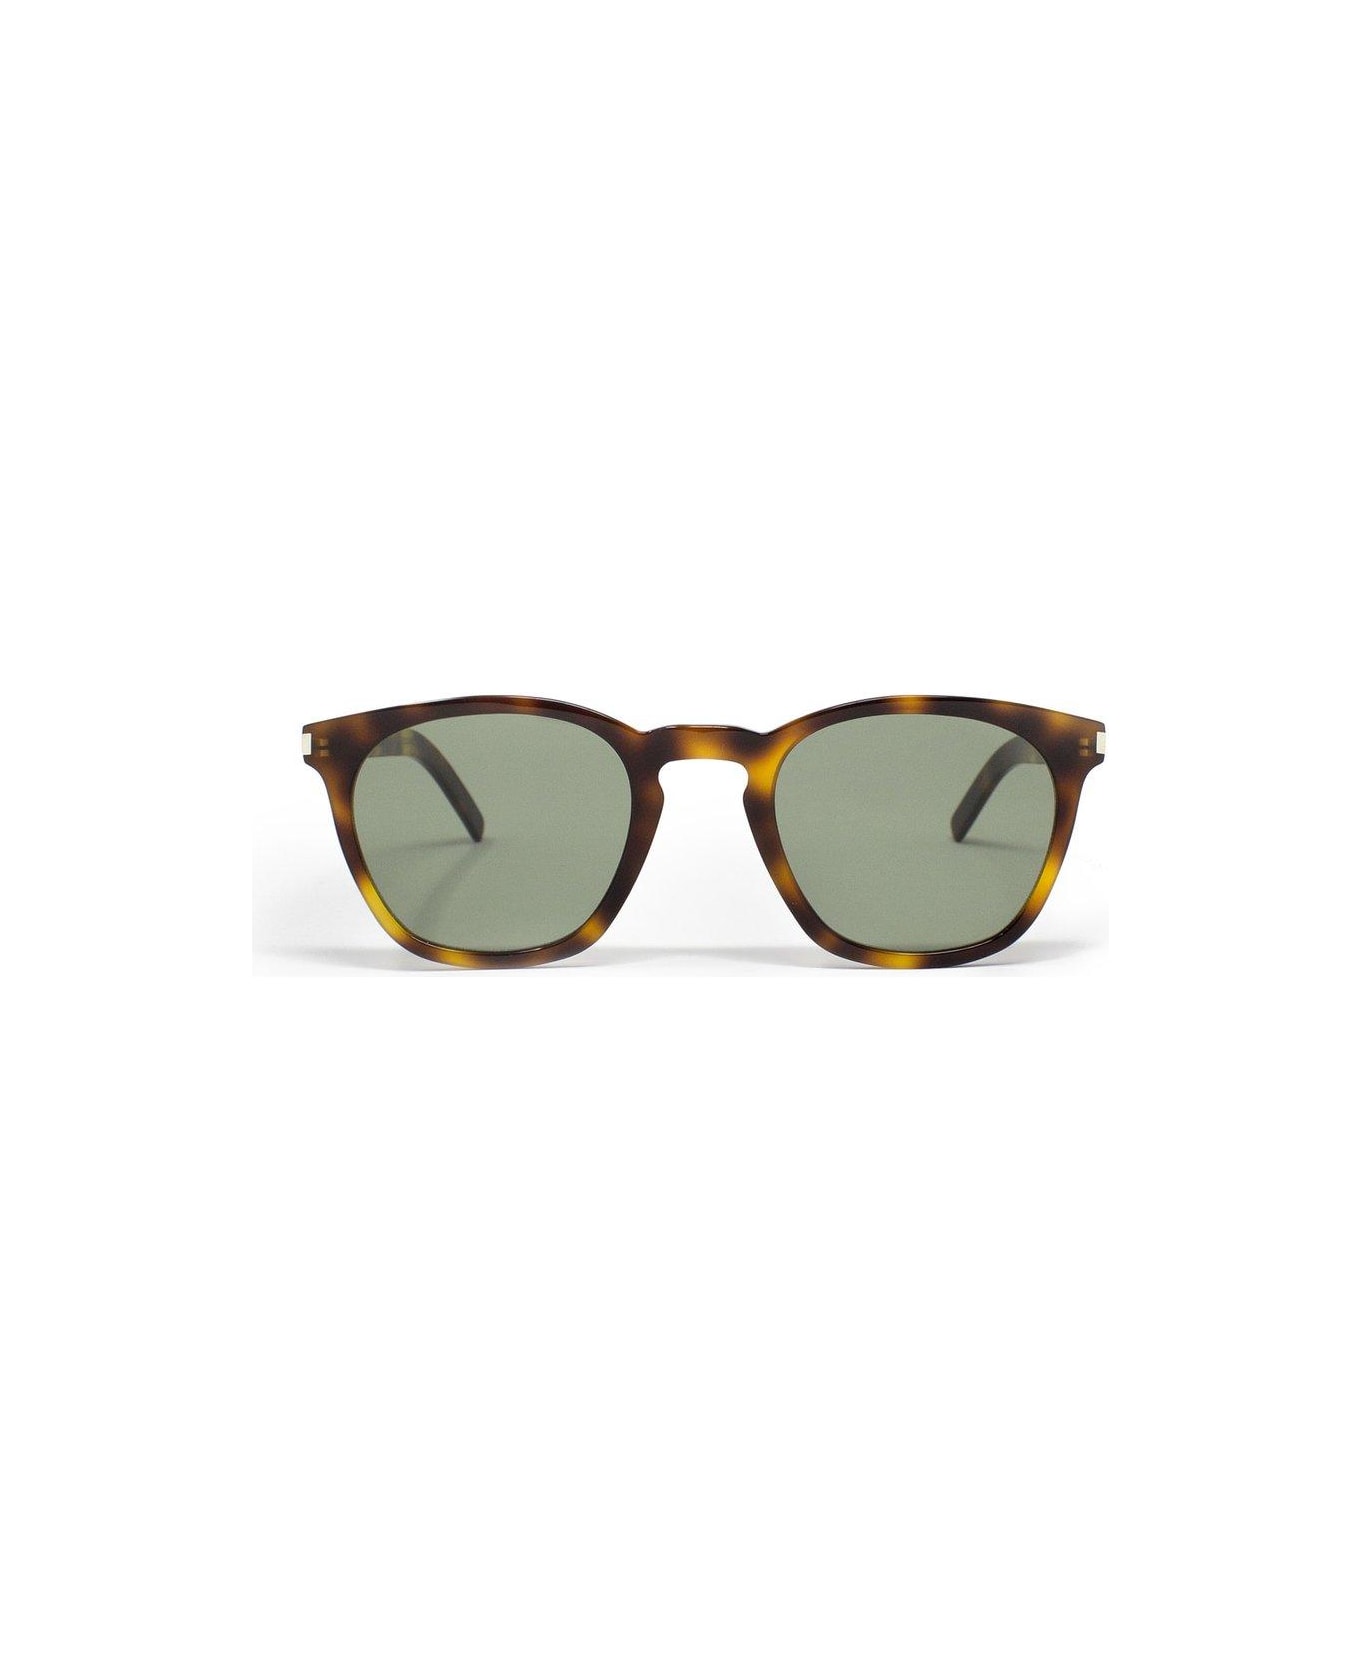 Saint Laurent Eyewear Wellington Sunglasses Sunglasses - 002 HAVANA HAVANA GREEN サングラス